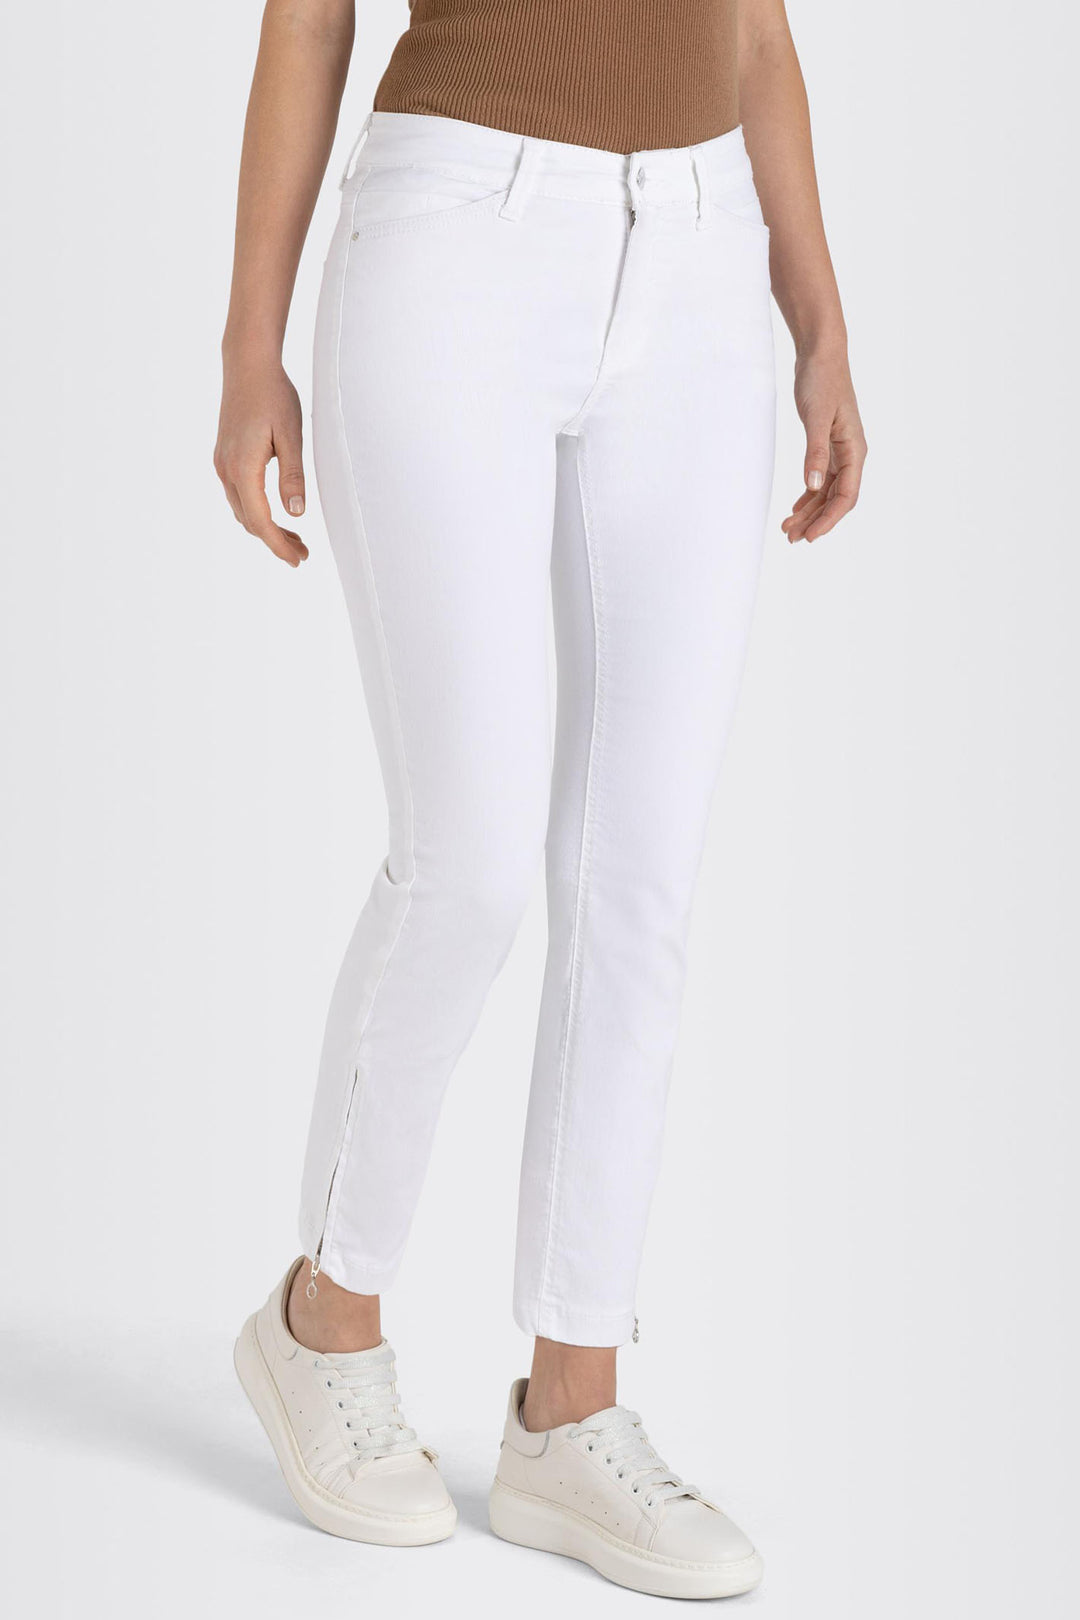 Mac 5471-90-0355L D010 Dream Chic White Ankle Length Jeans - Olivia Grace Fashion